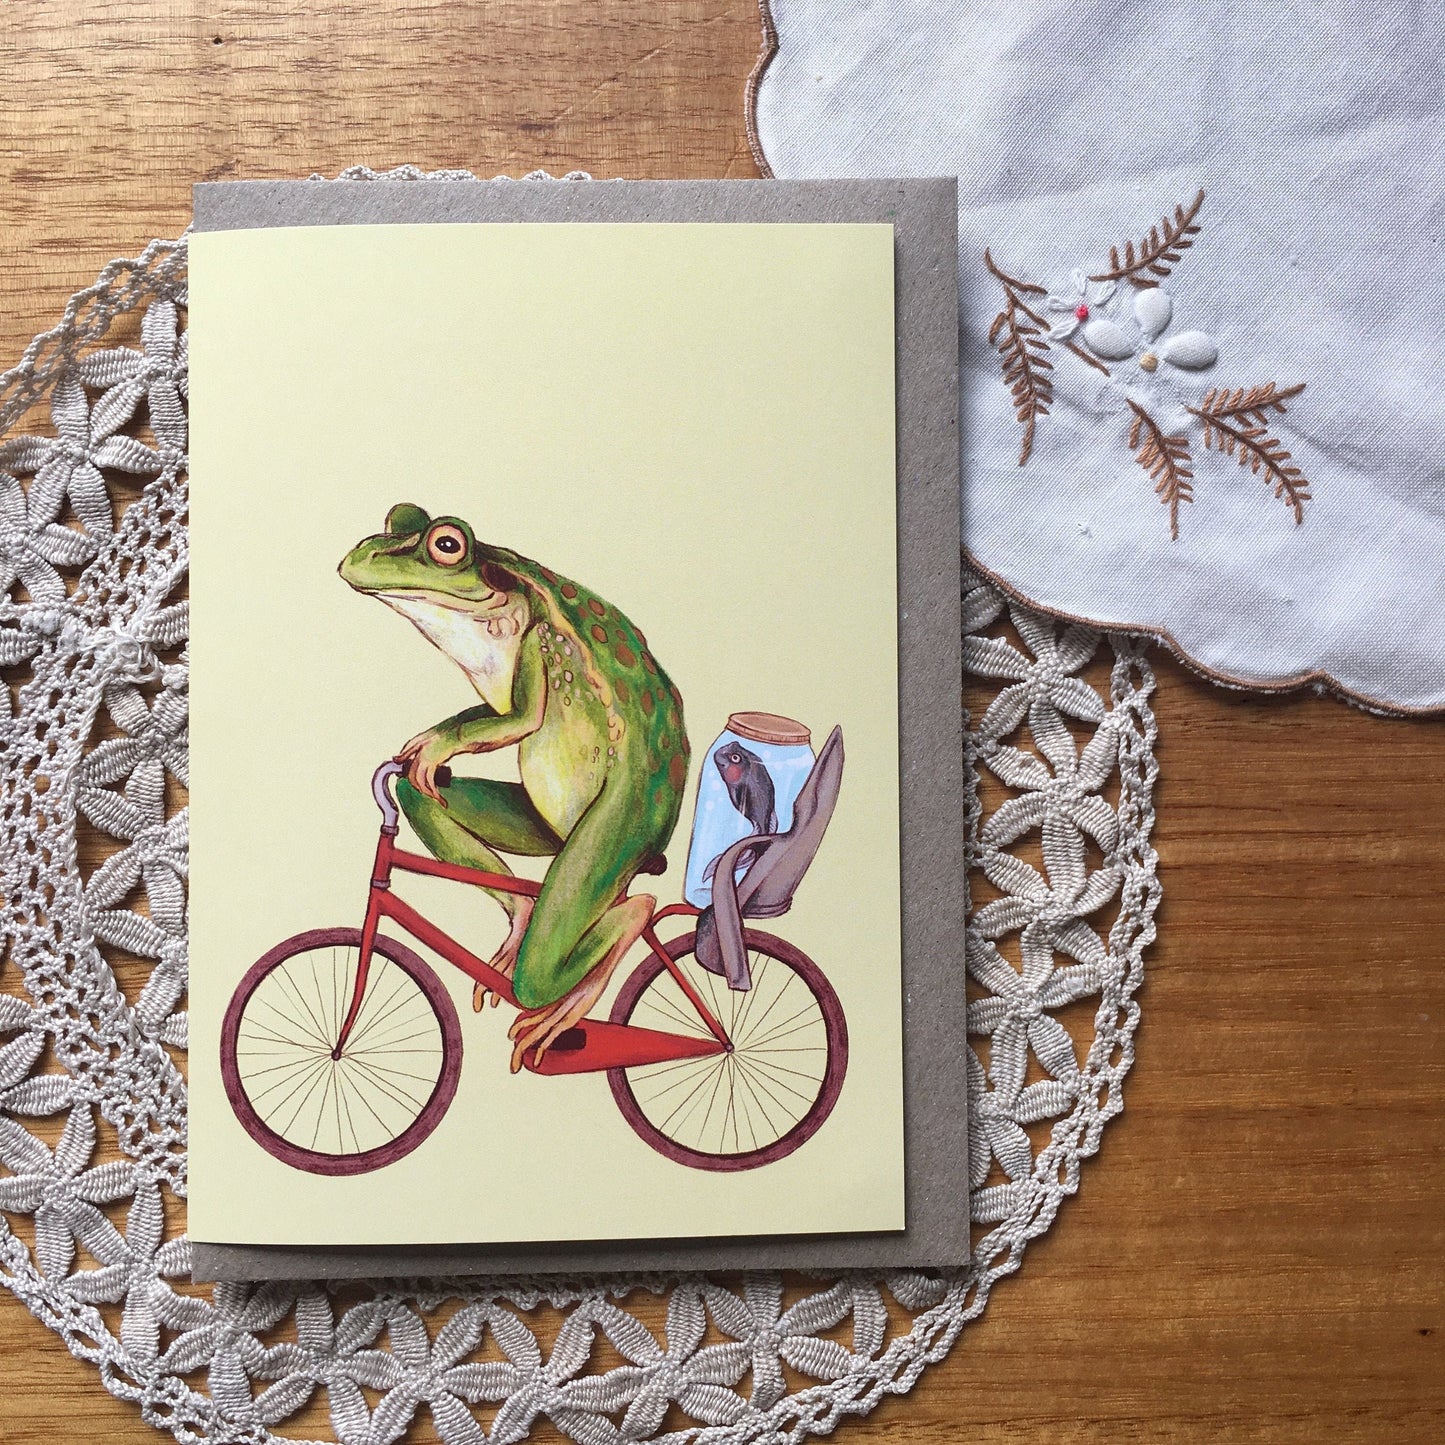 Anna Seed Art | Greeting Card - Bicycle Frog. Fun illustration